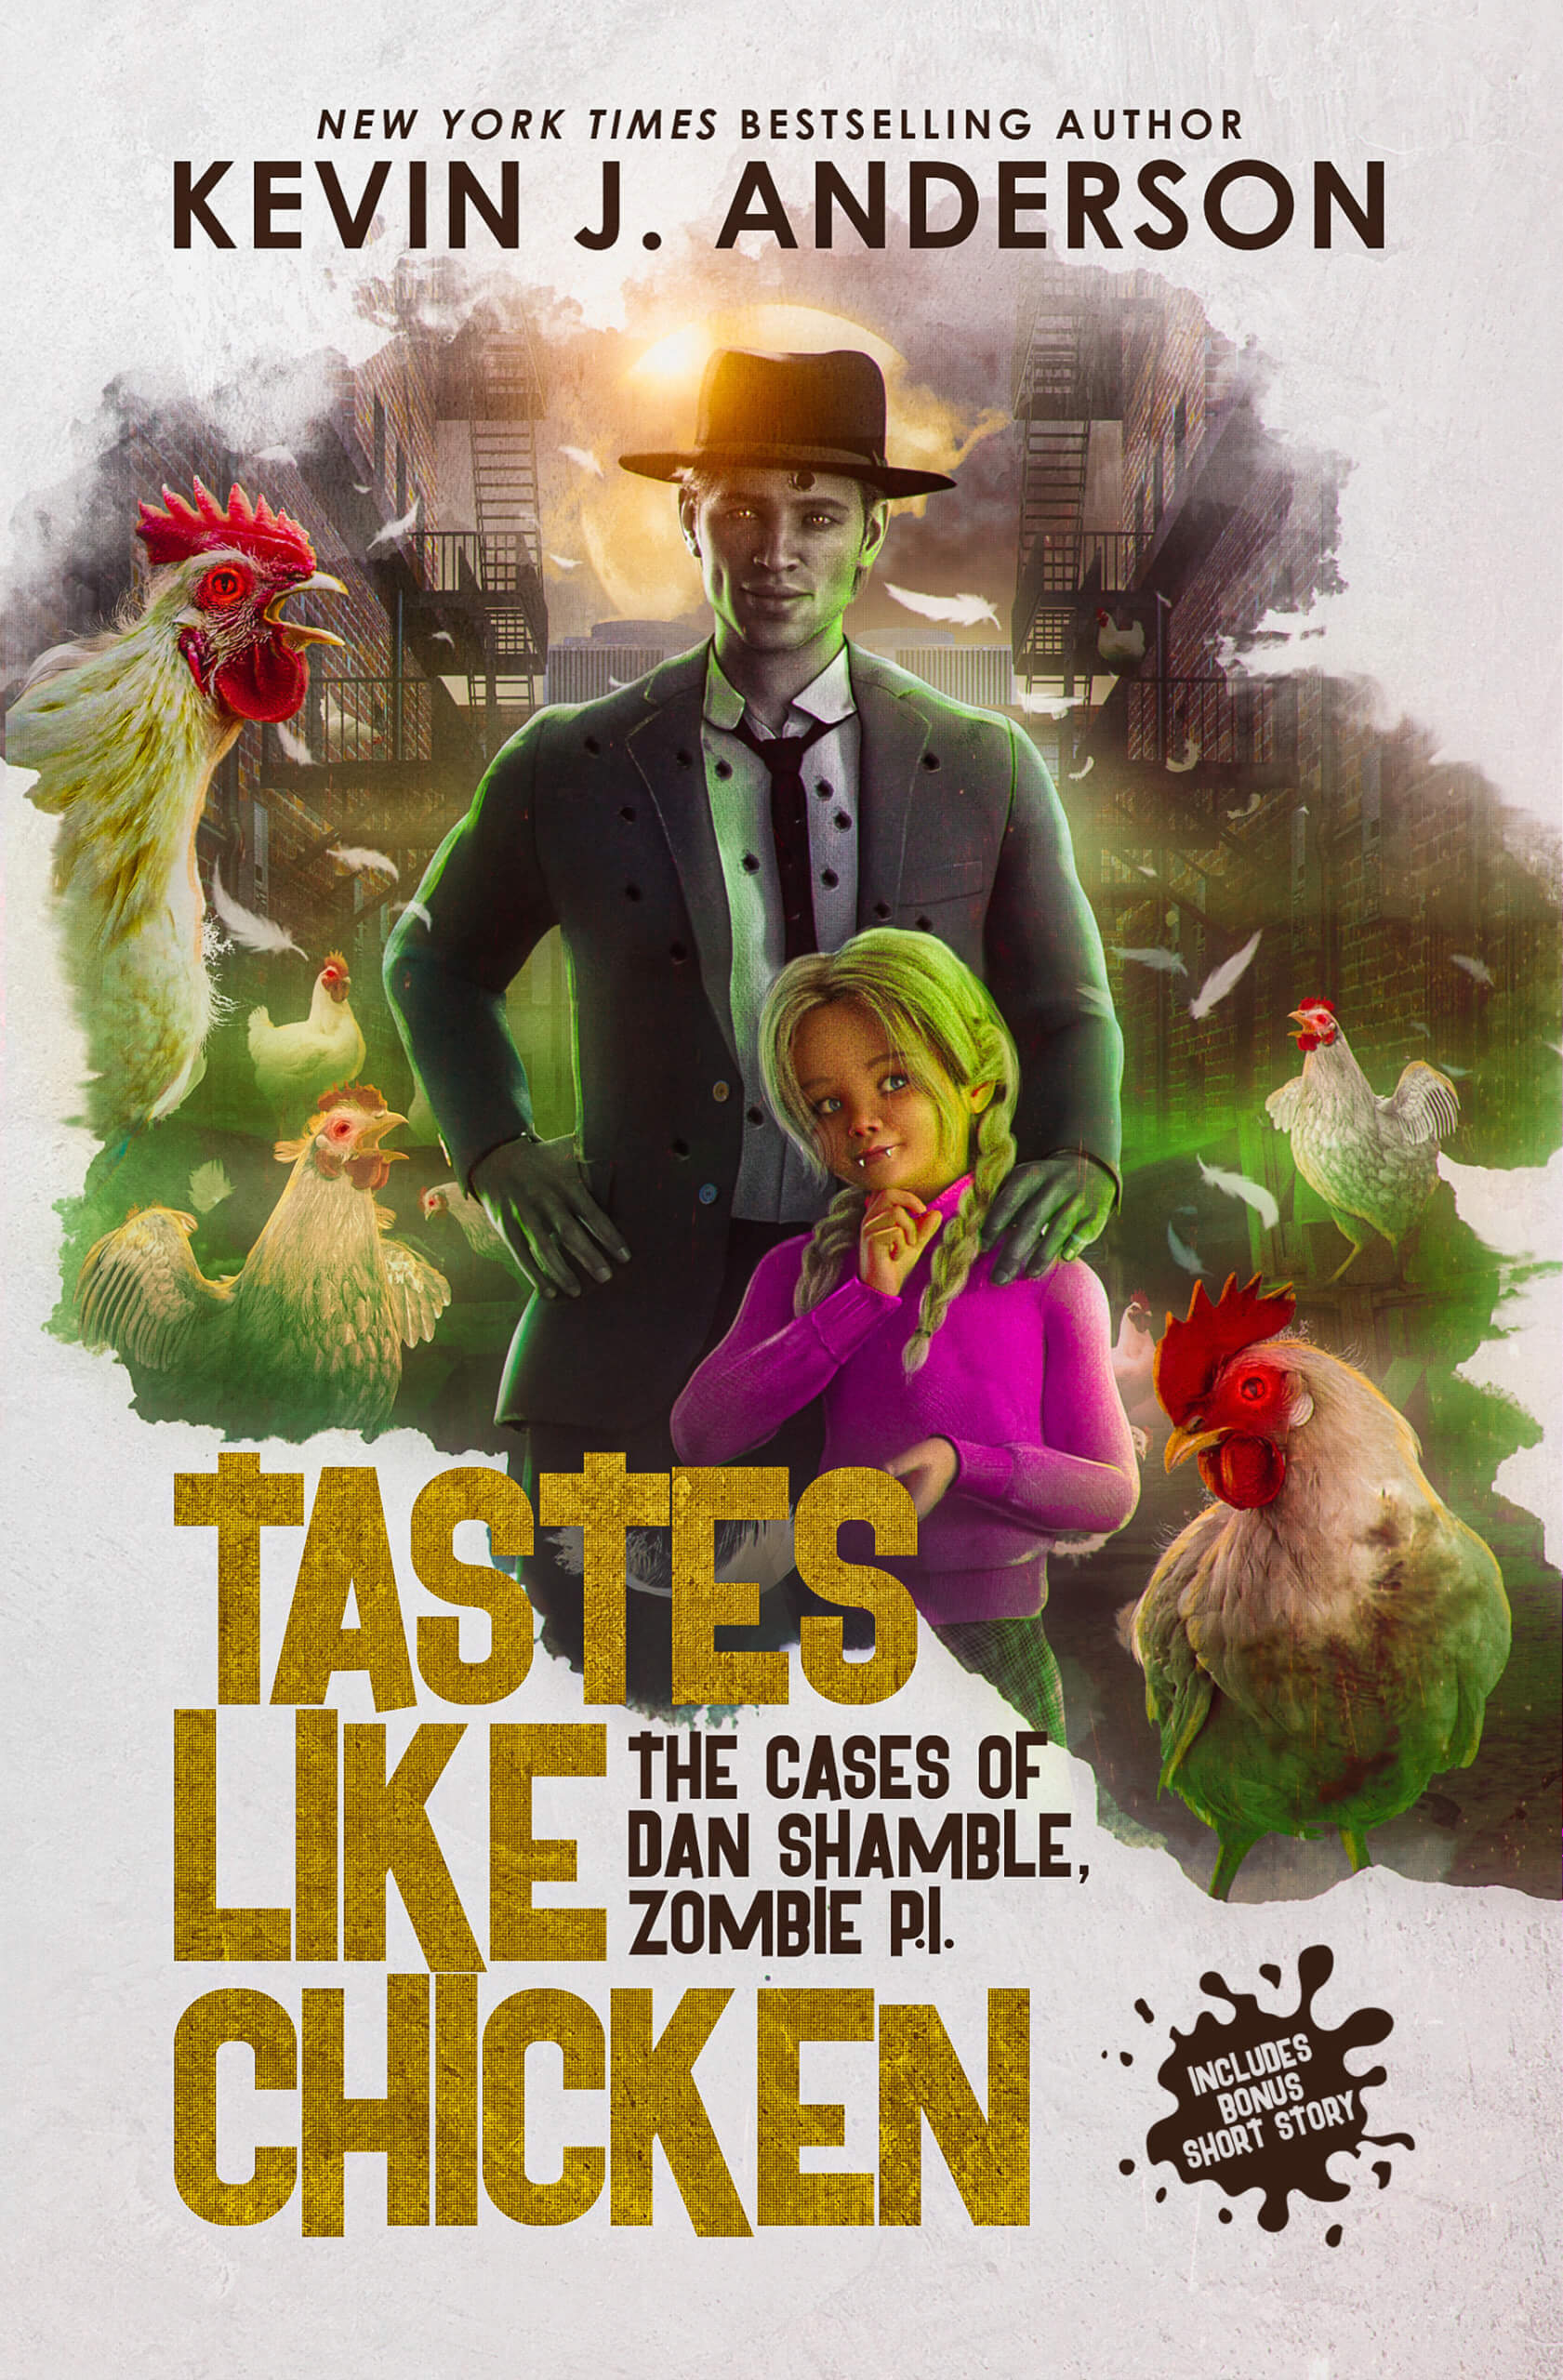 Dan Shamble, Zombie PI: Tastes Like Chicken